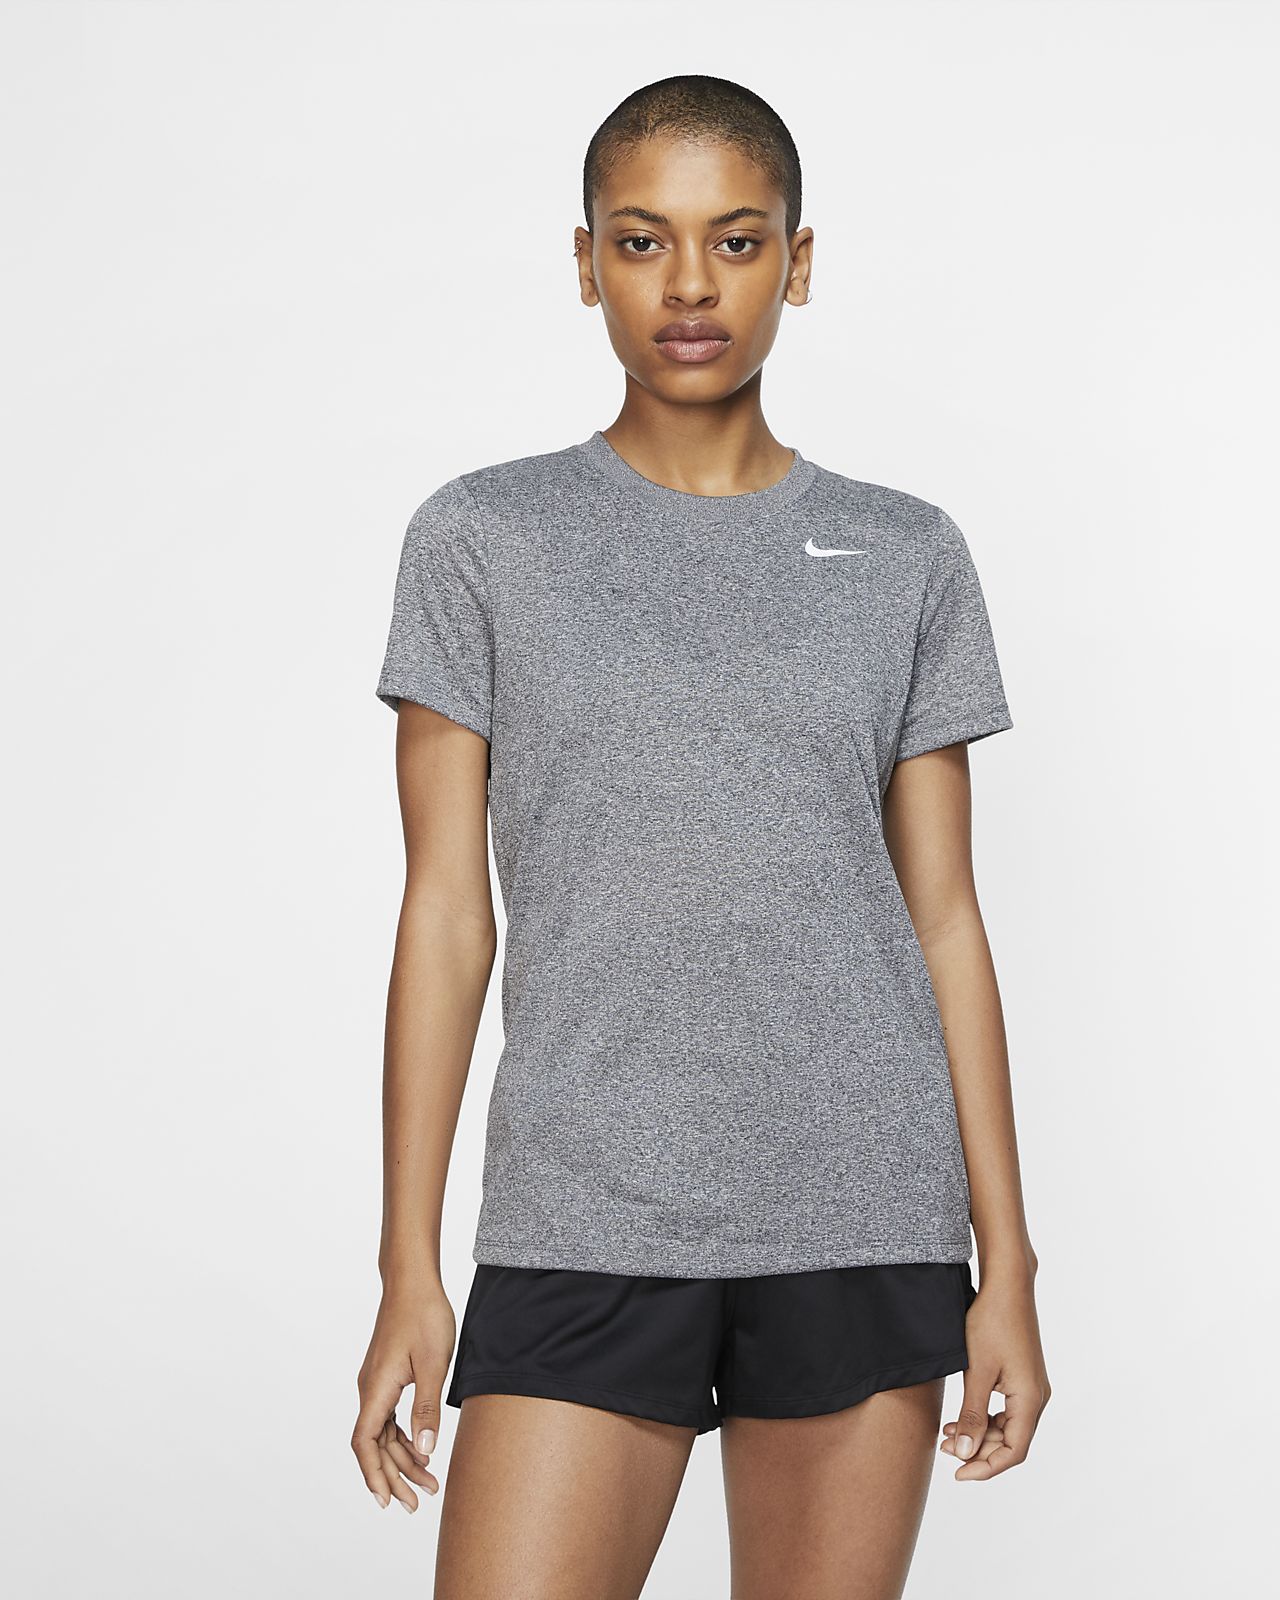 Nike Dri Fit Womens Training T Shirt - FitnessRetro